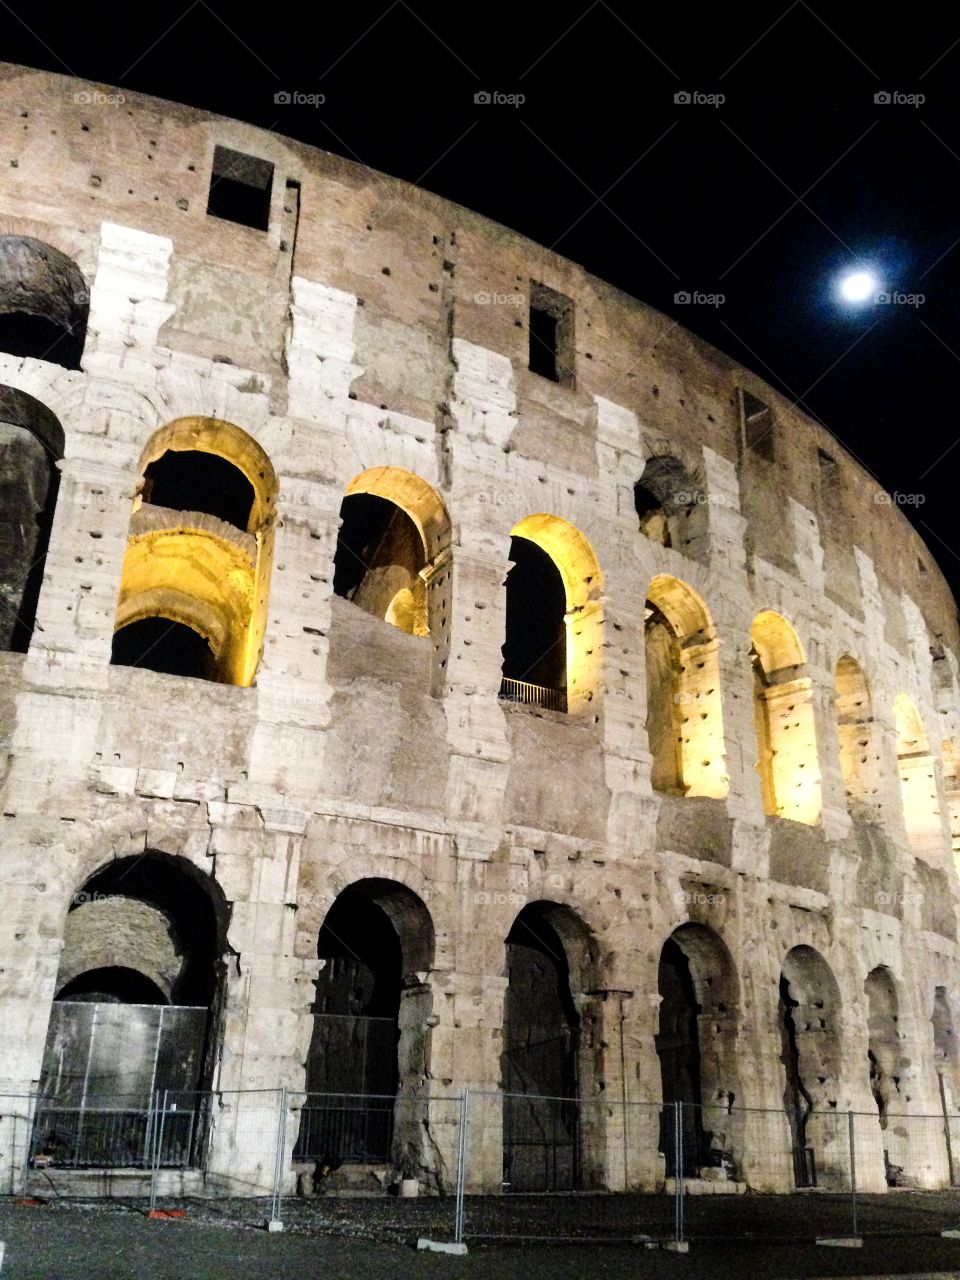 Coliseum. Italy. Rome. April 20, 2019